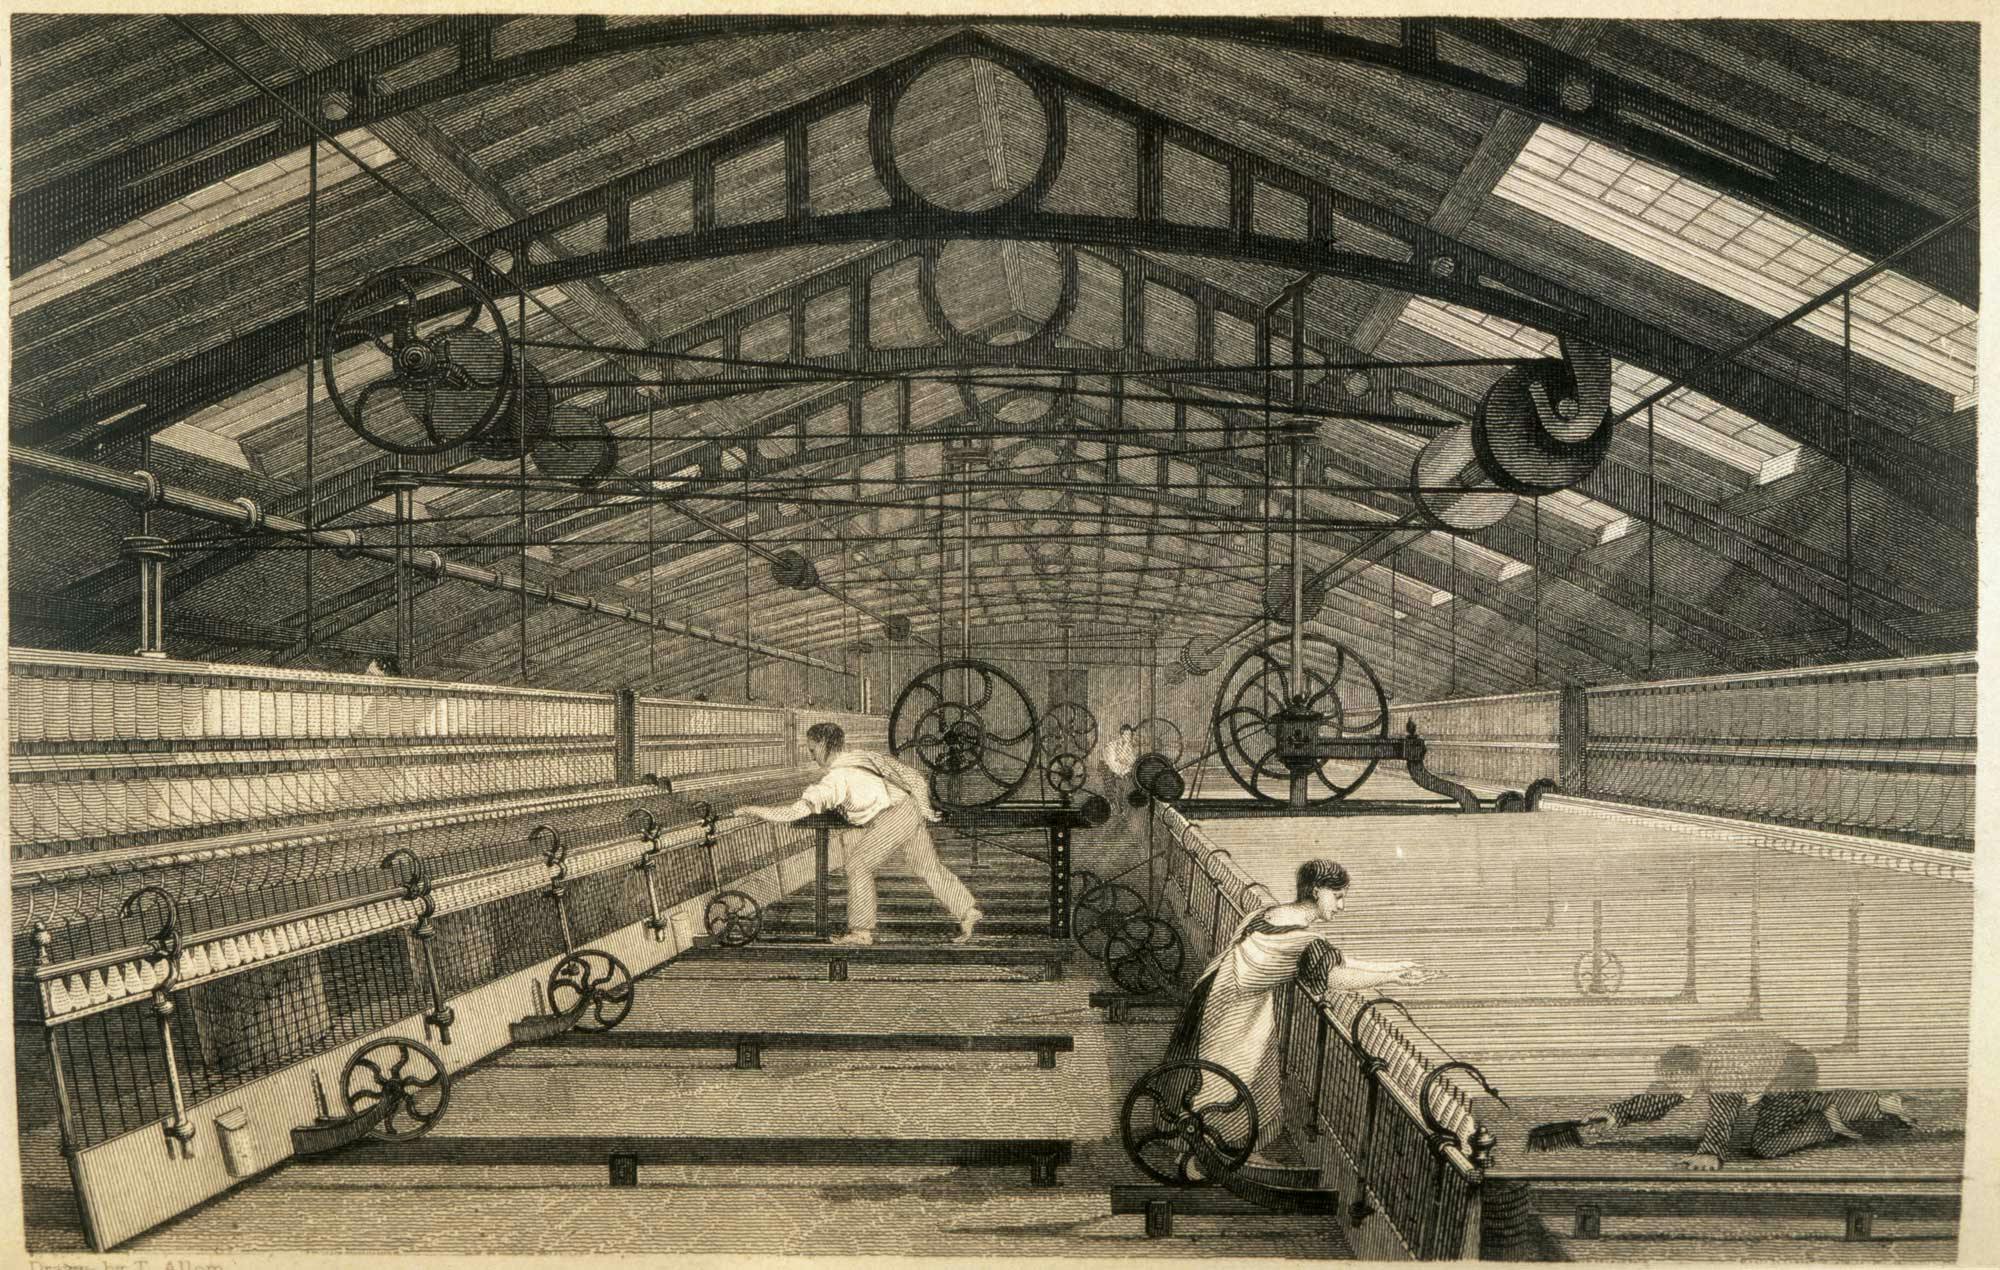 A textile mill in Britain